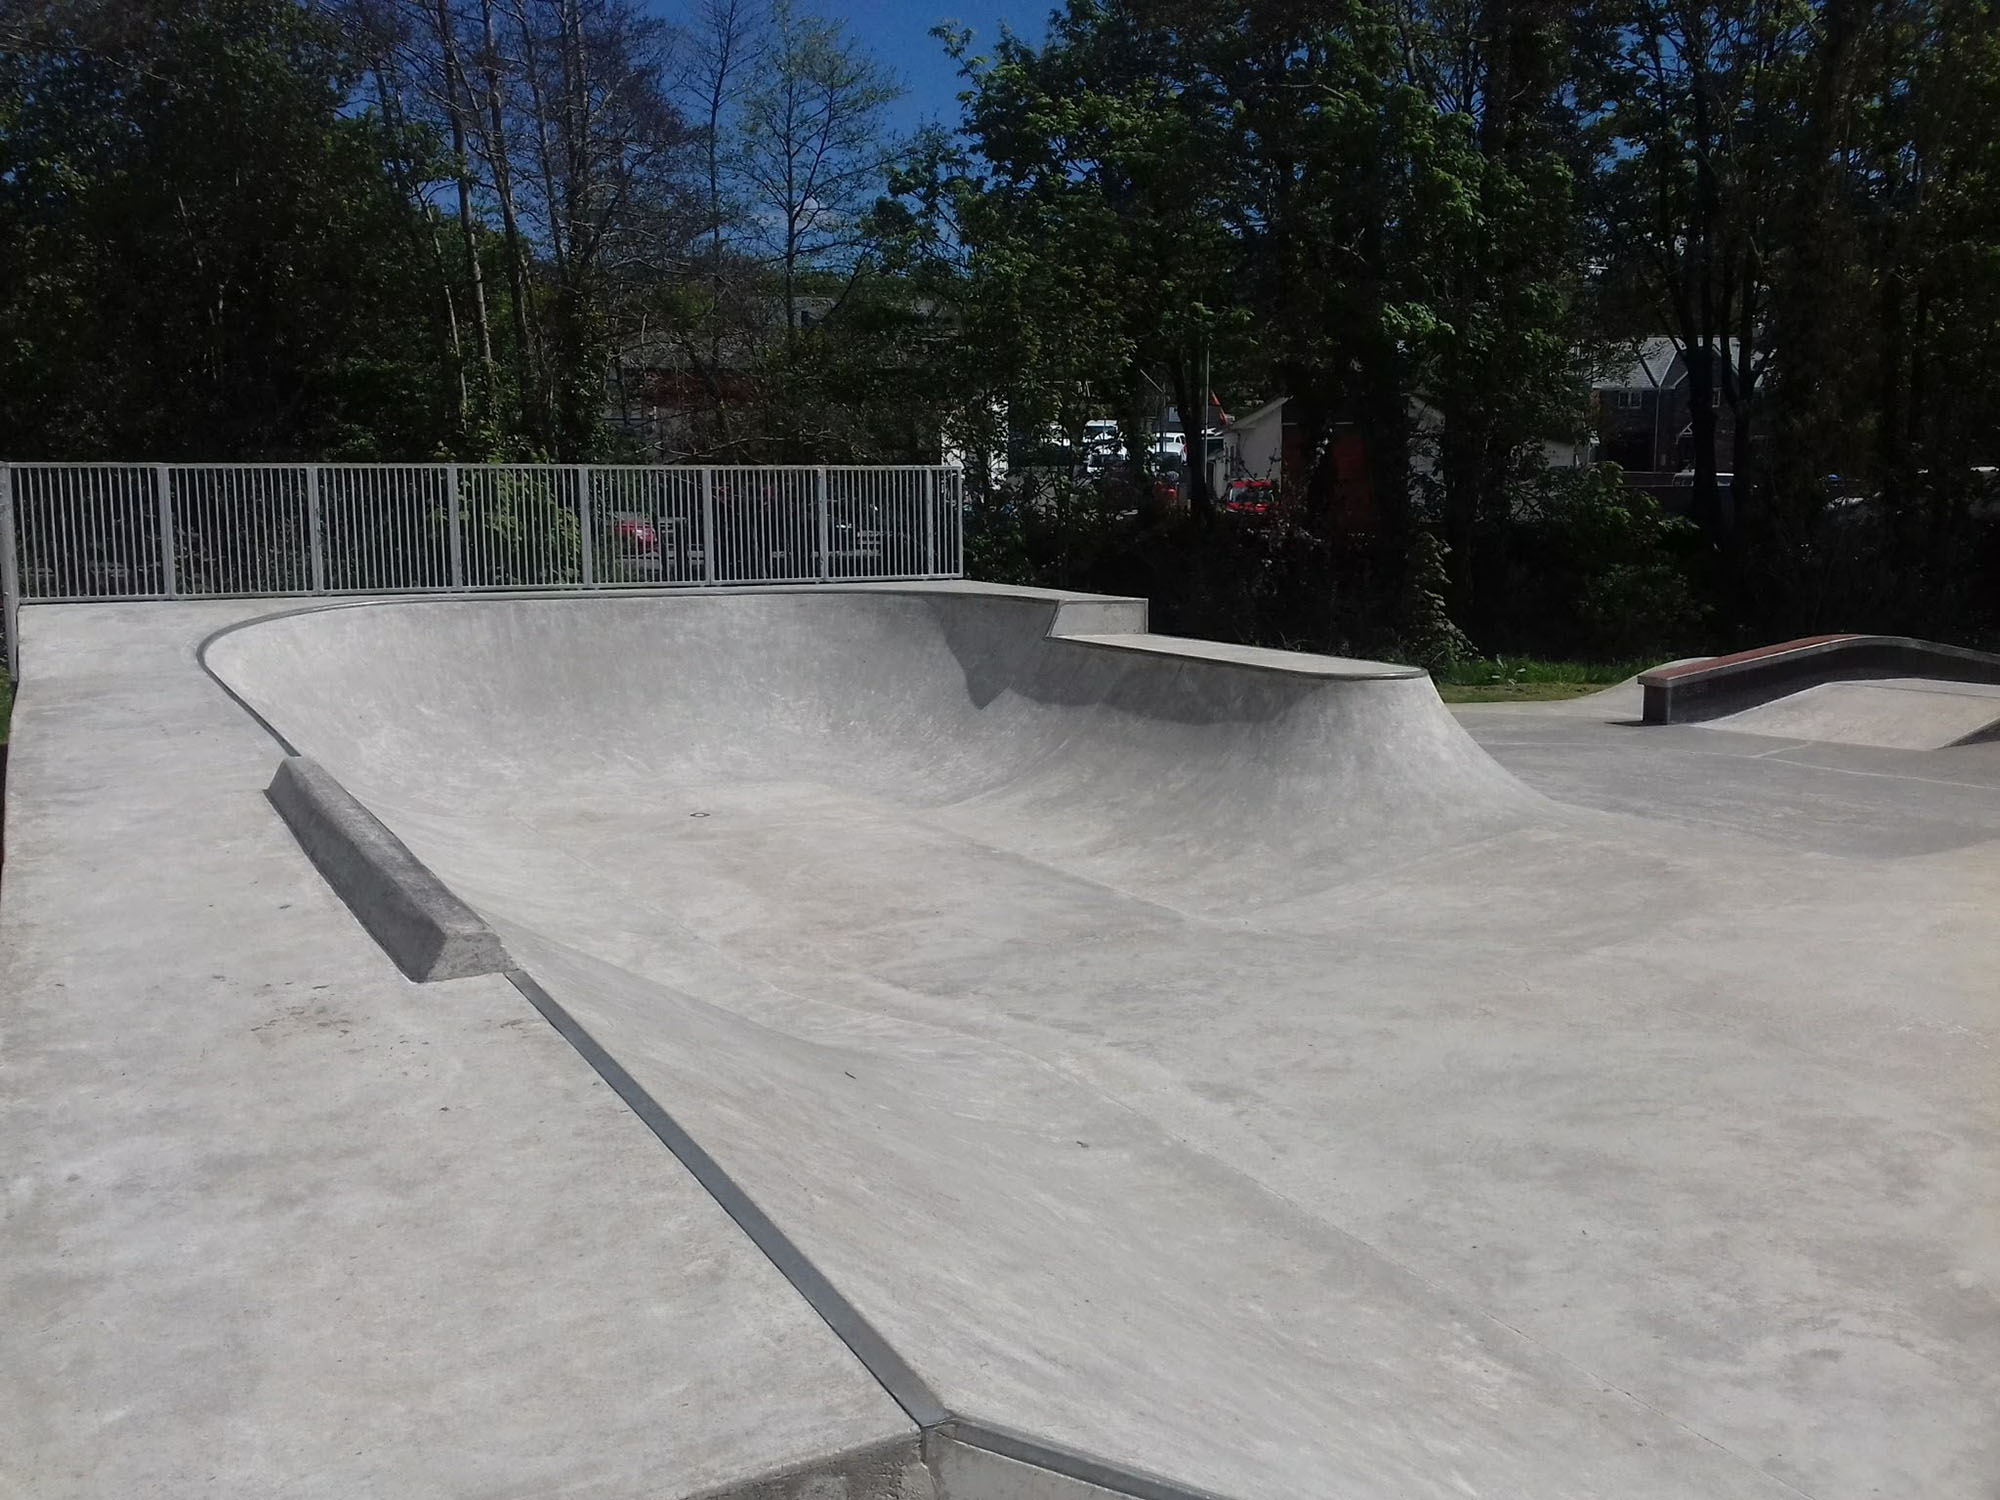 hatherleigh skatepark island park review tips skateboarding in devon u k